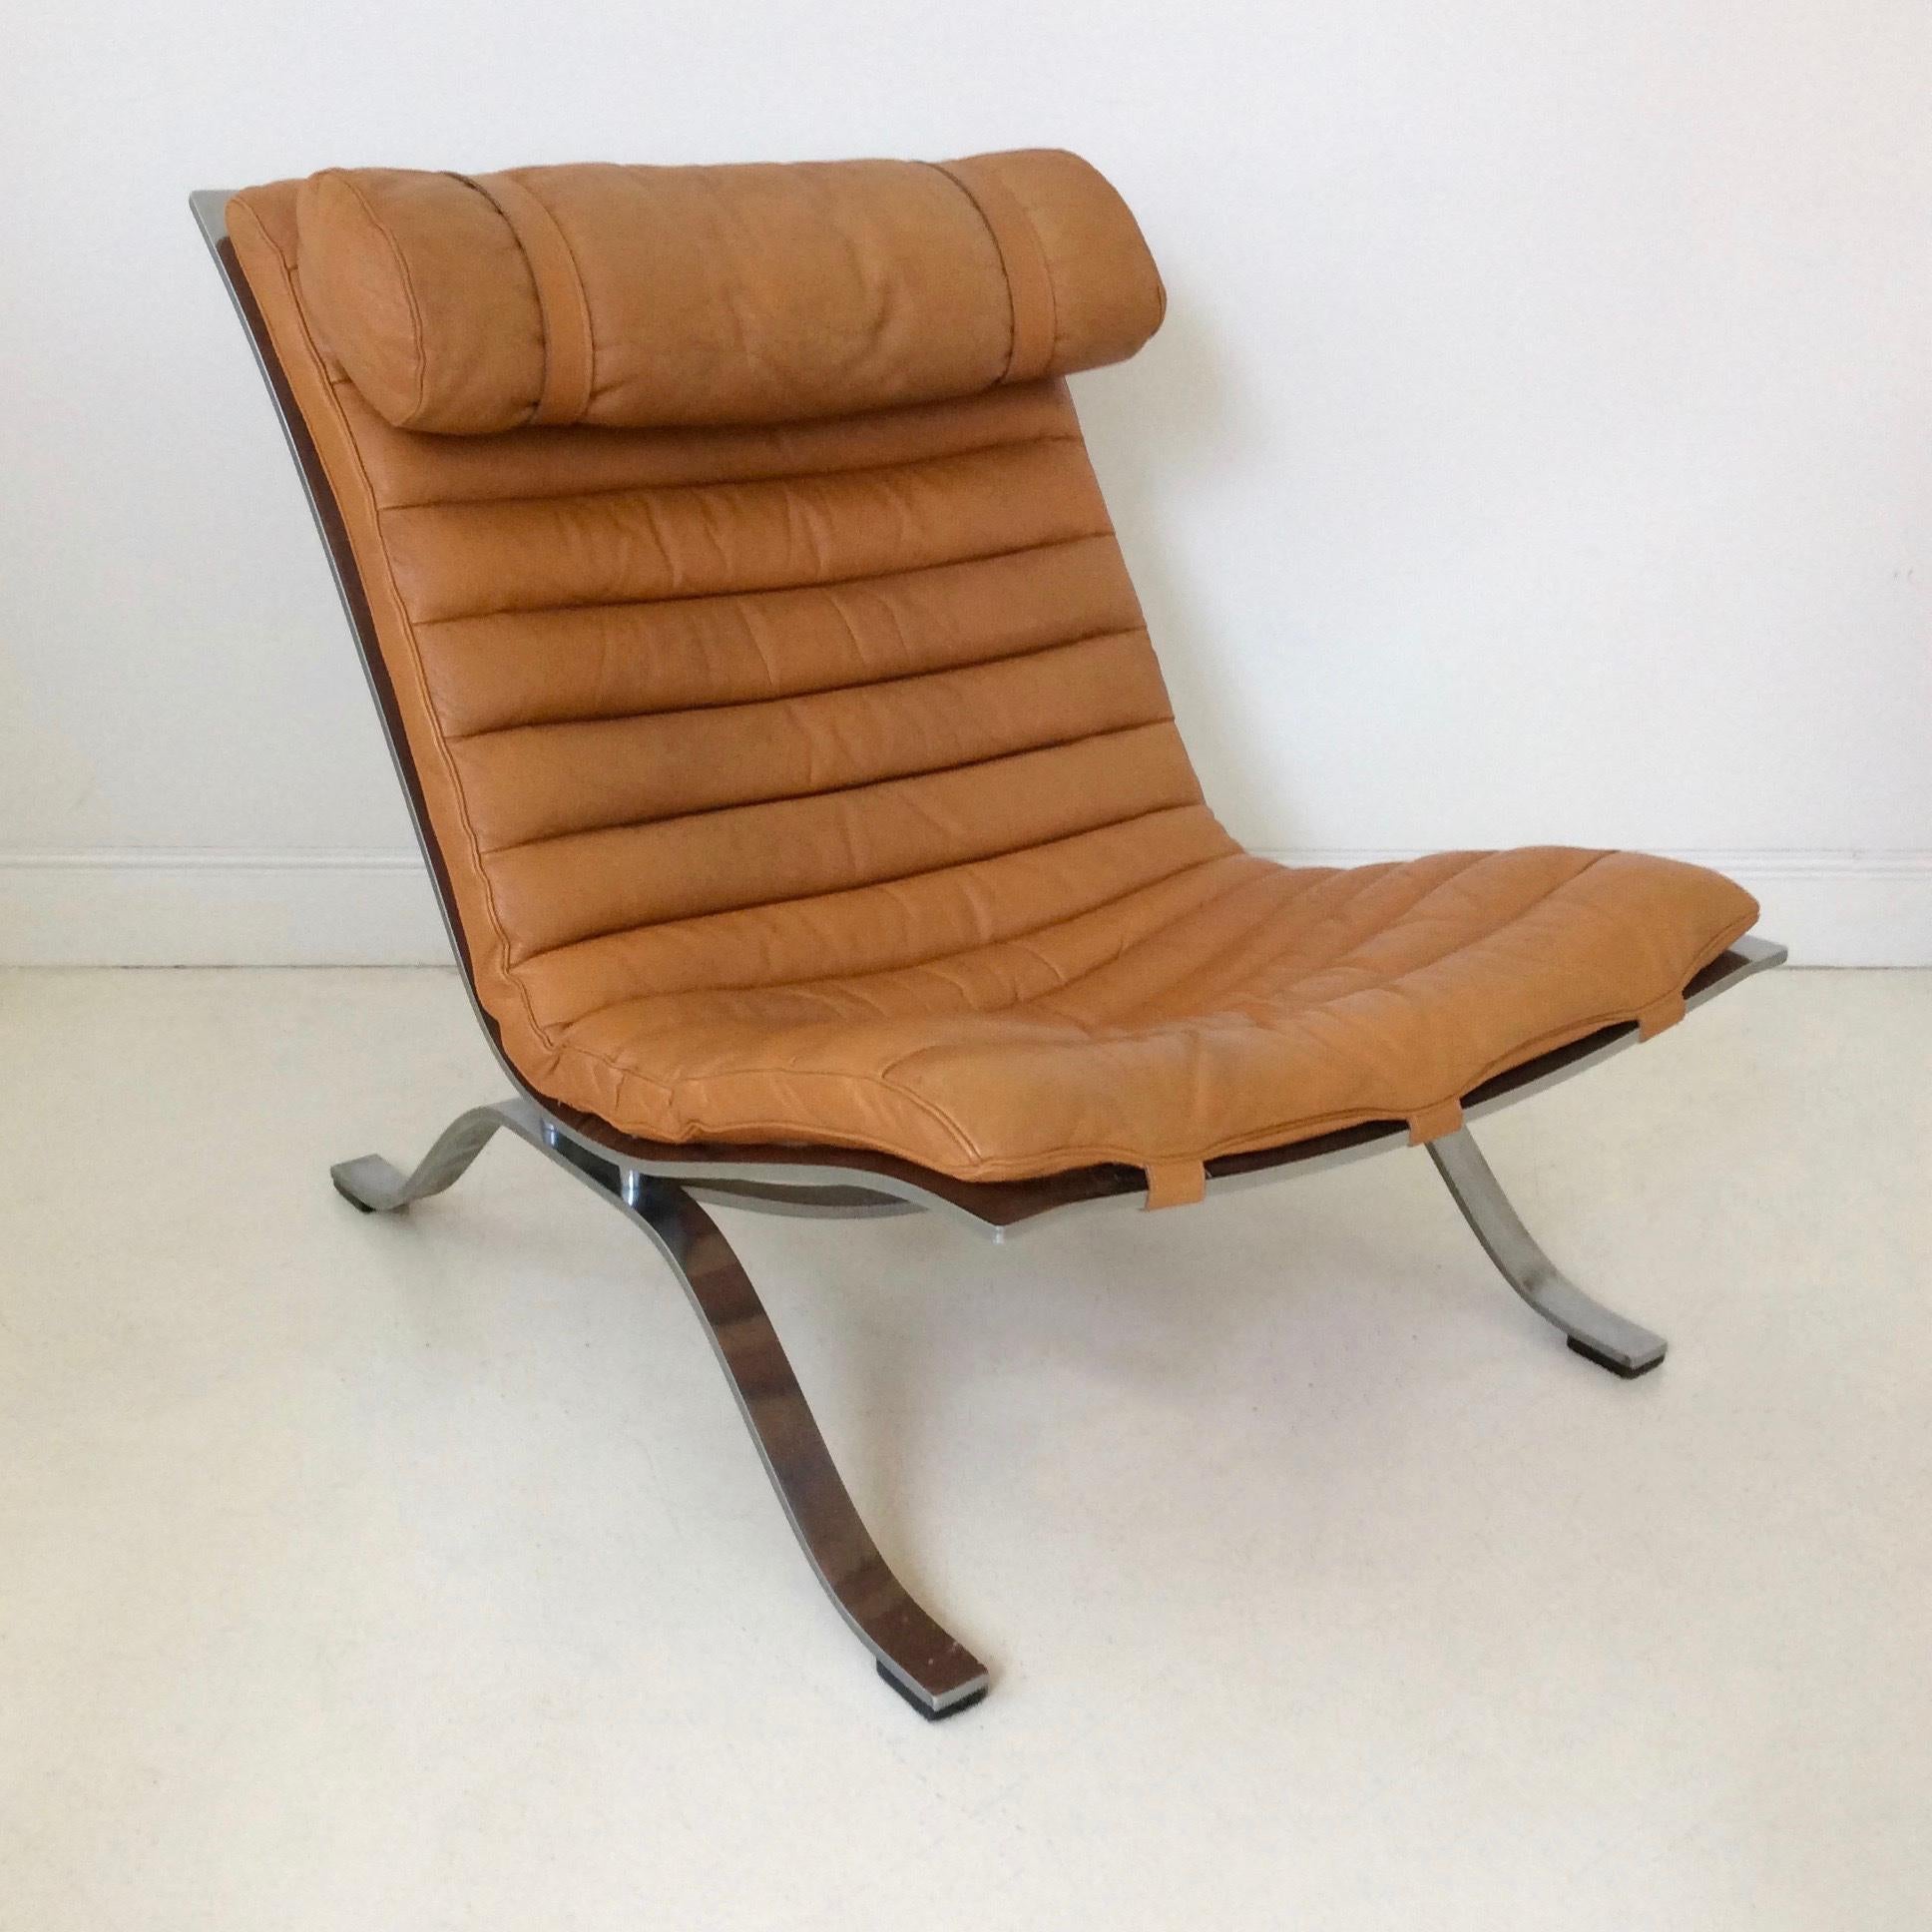 Arne Norell Ari Lounge Chair, circa 1965, Sweden (Skandinavische Moderne)